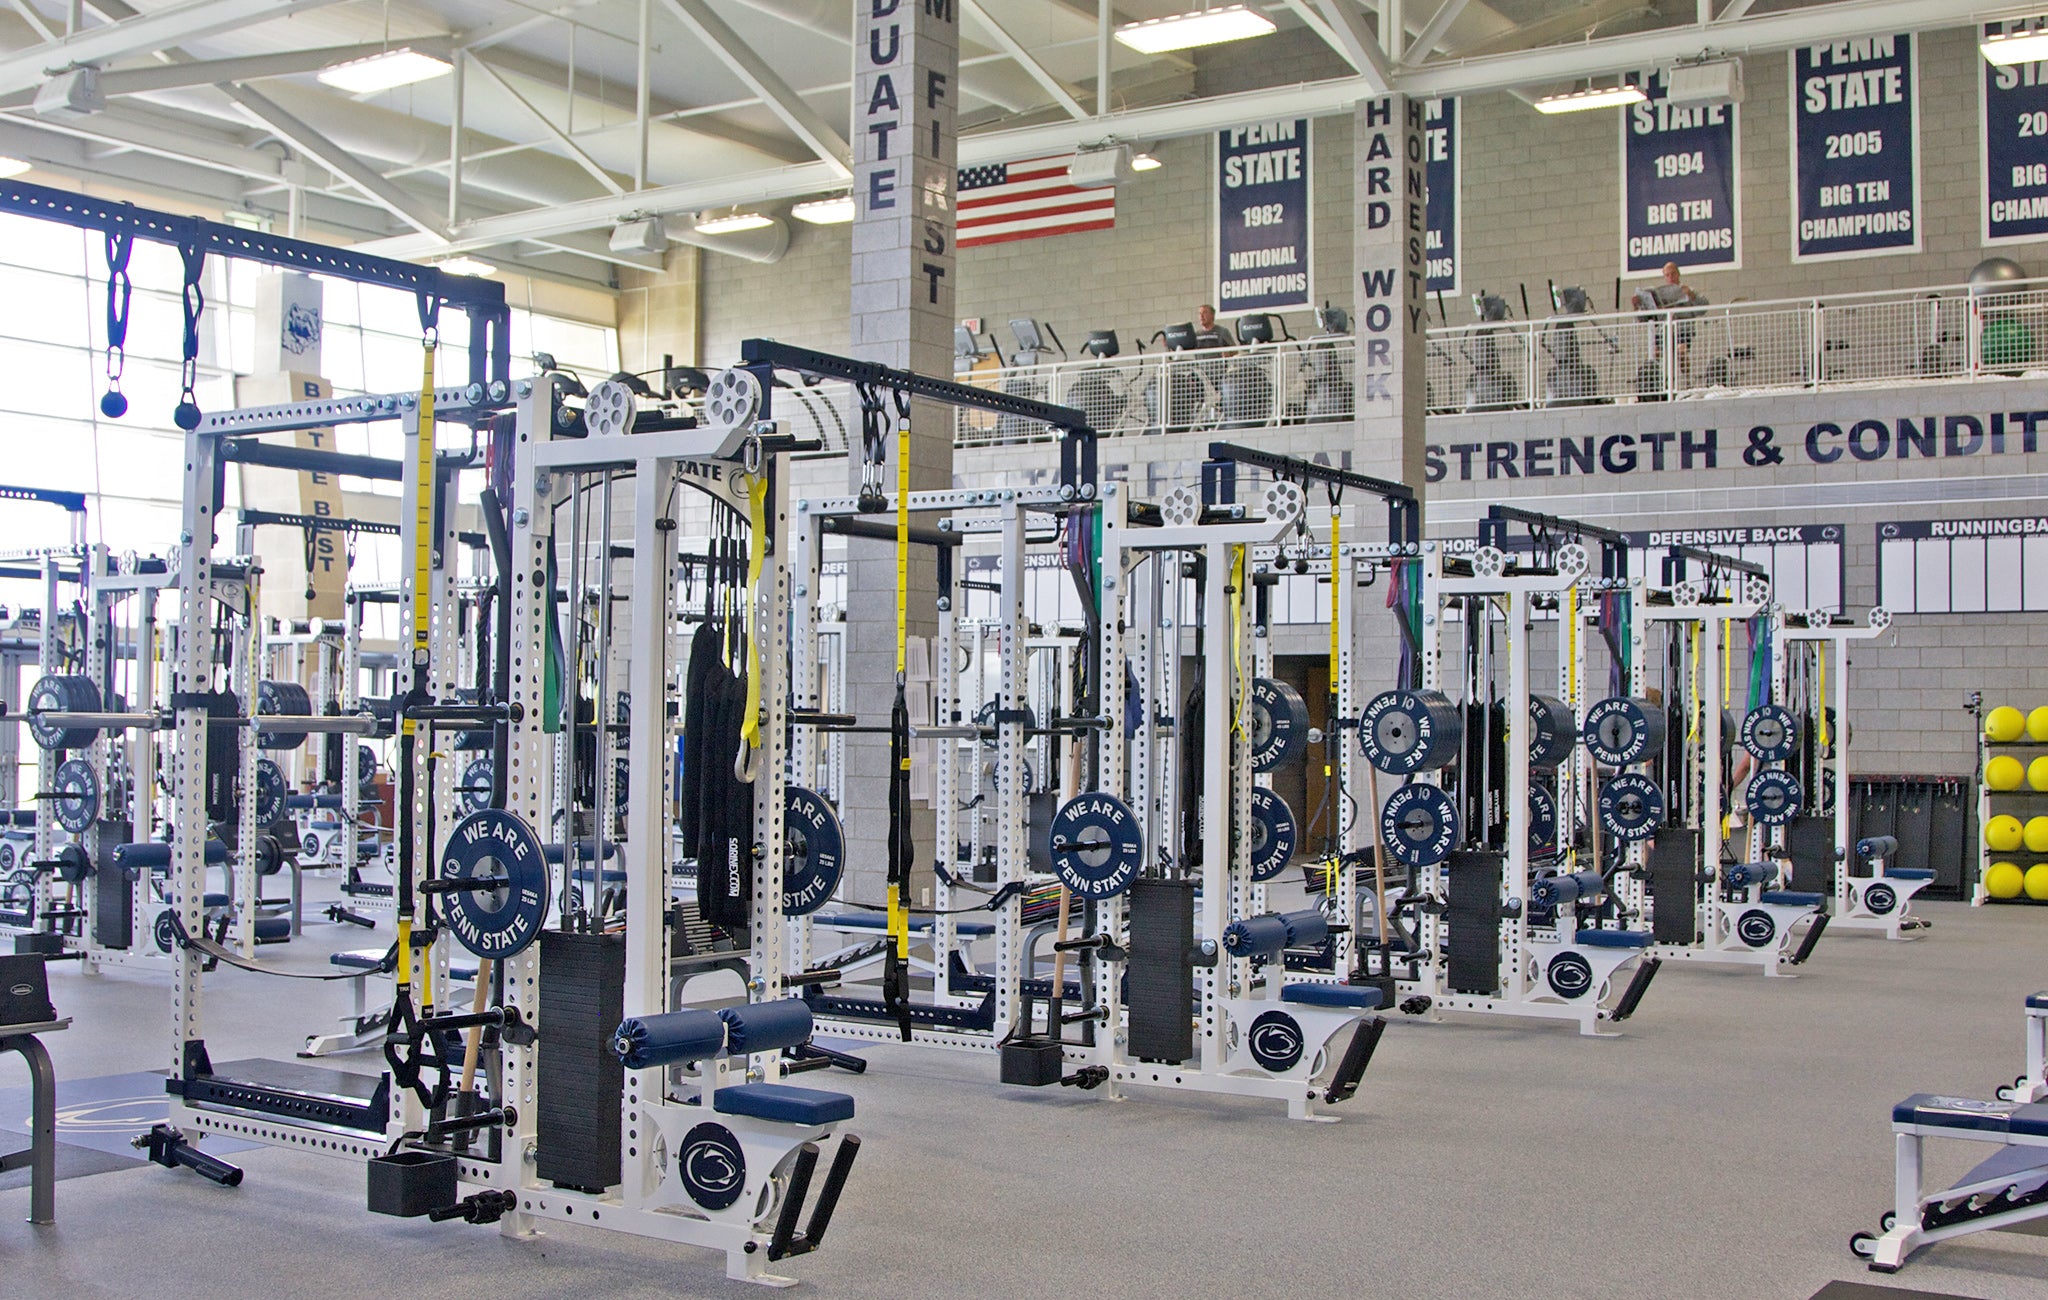 Penn State Football strength training facility